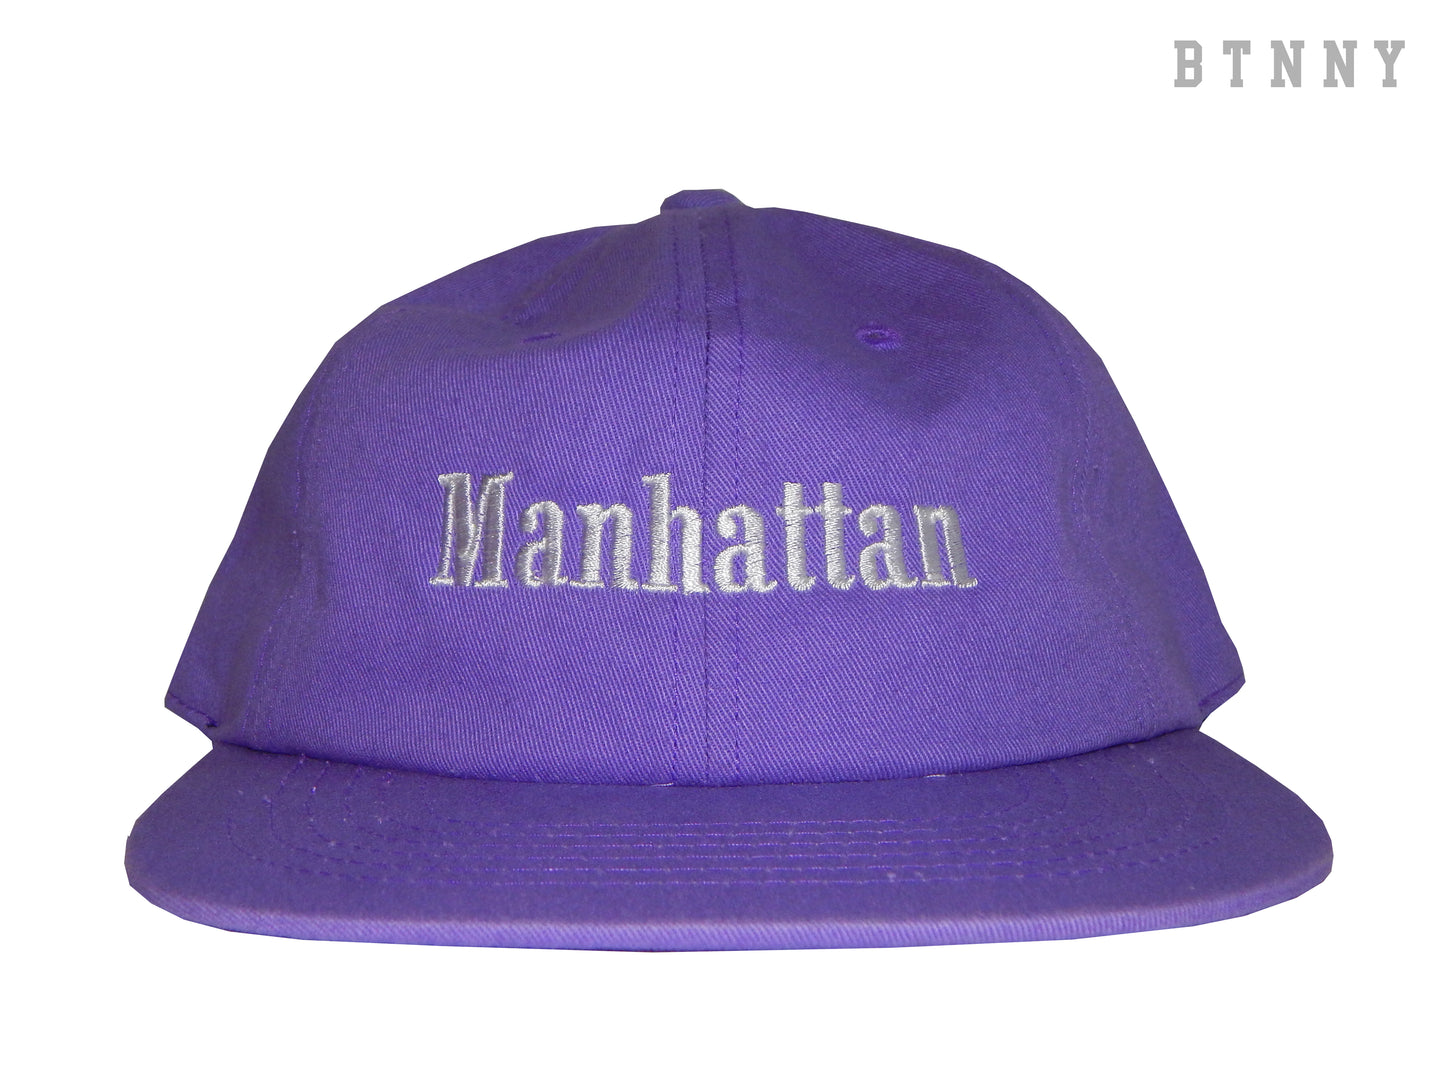 MANHATTAN BASEBALL CAP